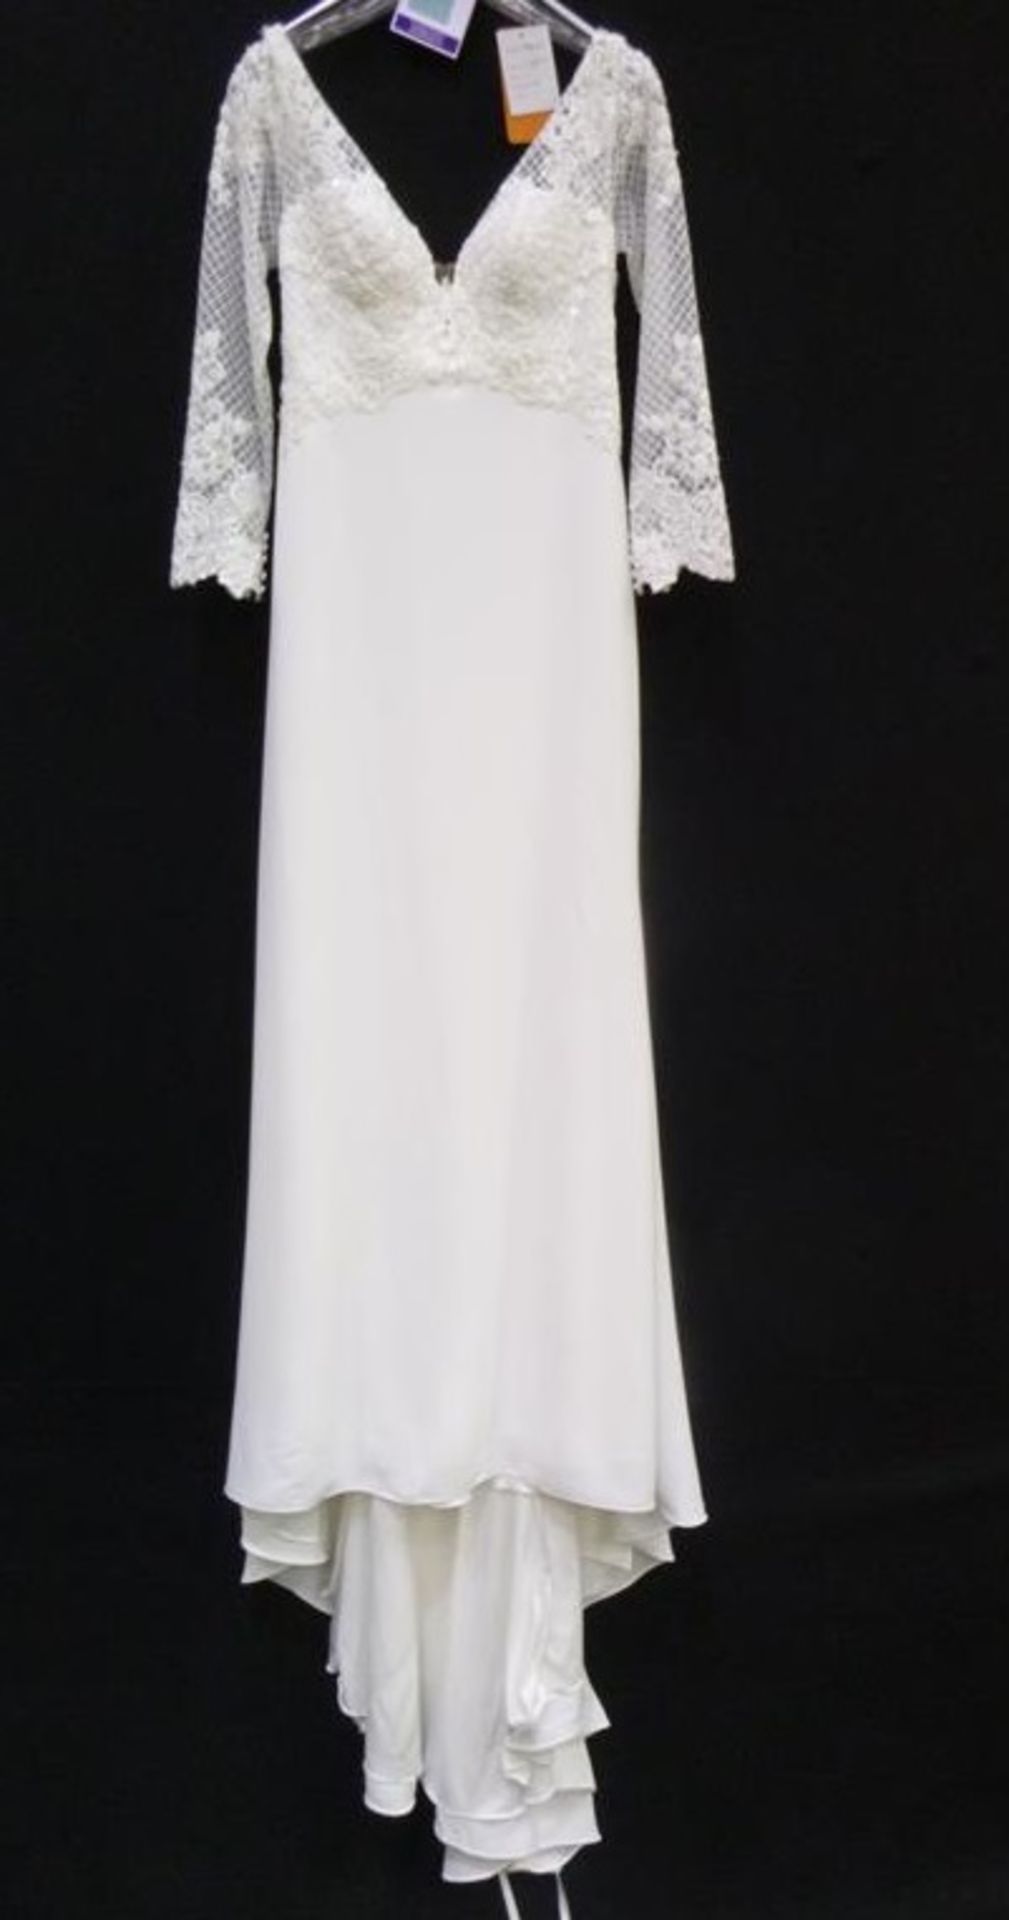 Modeca Darlington wedding dress